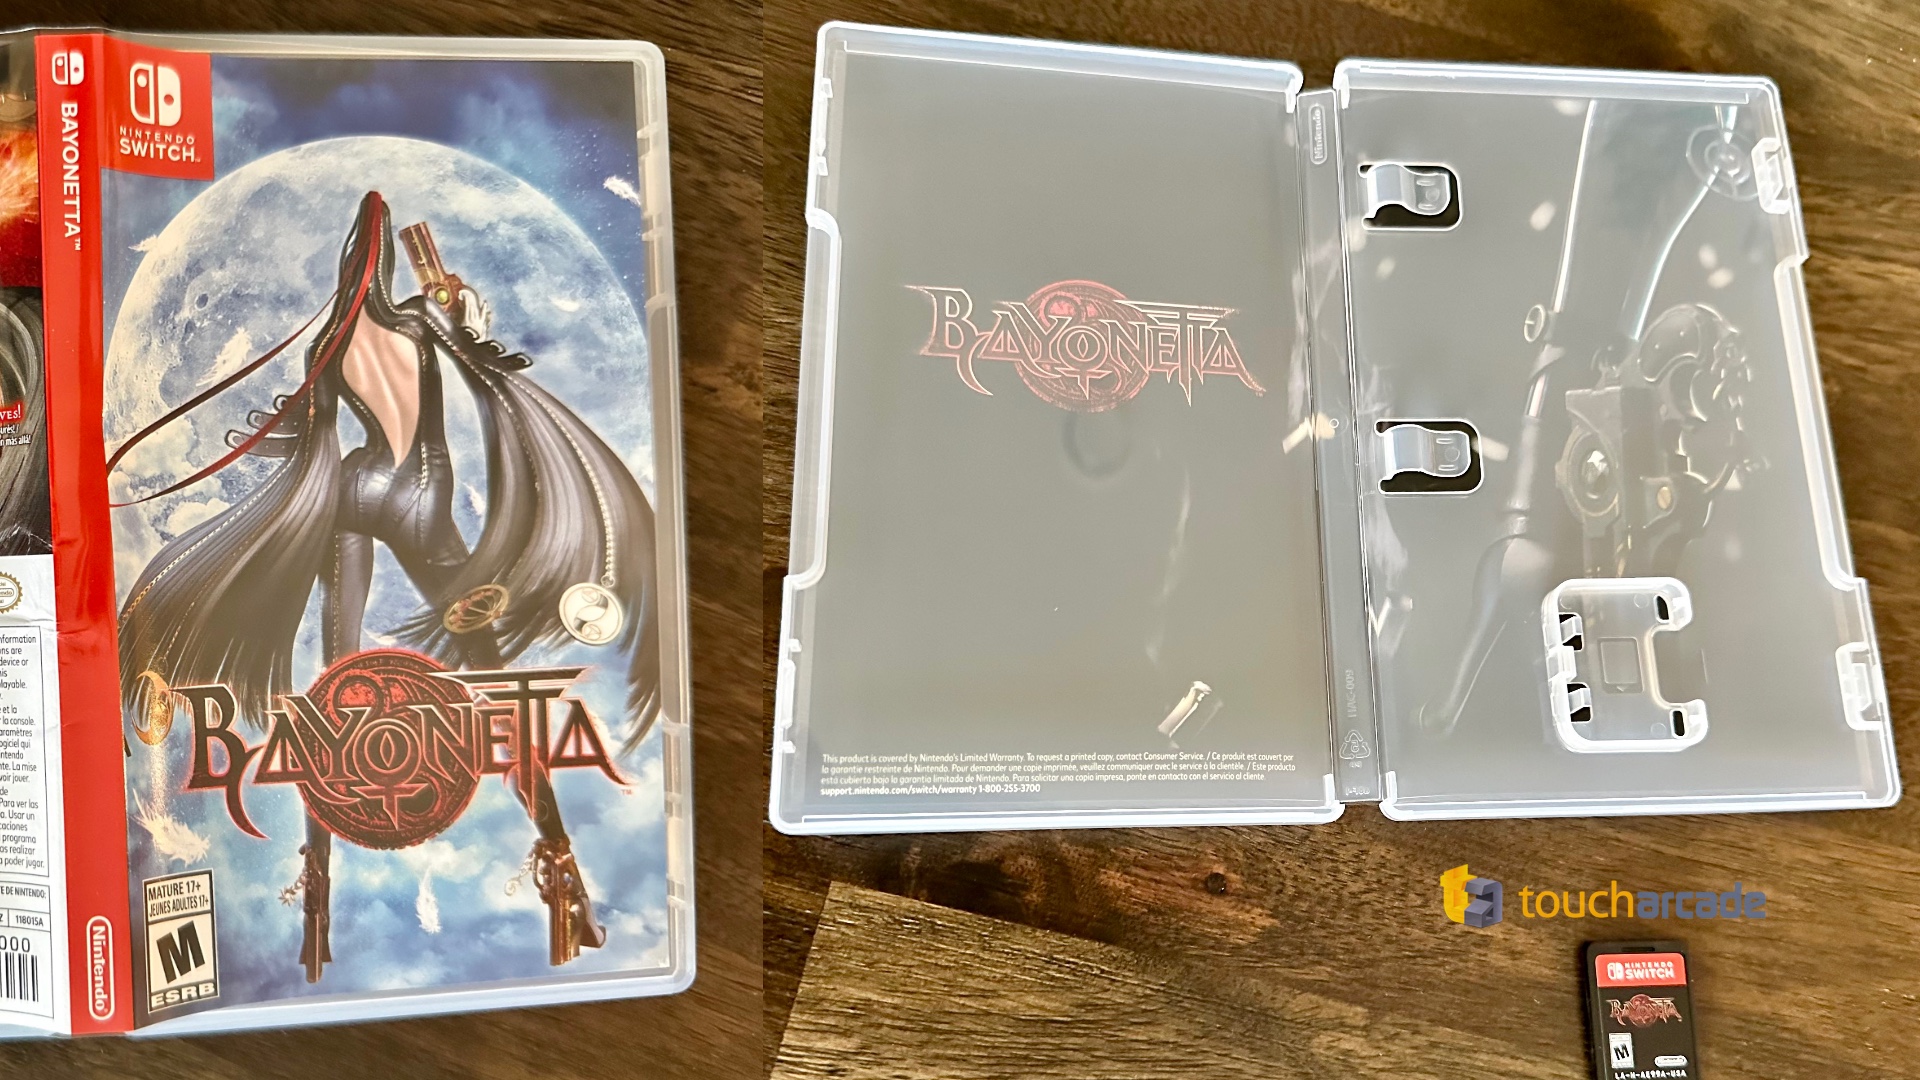 Bayonetta 3 Nintendo Switch (Physical Cartridge) - Brand New! Fast ship!